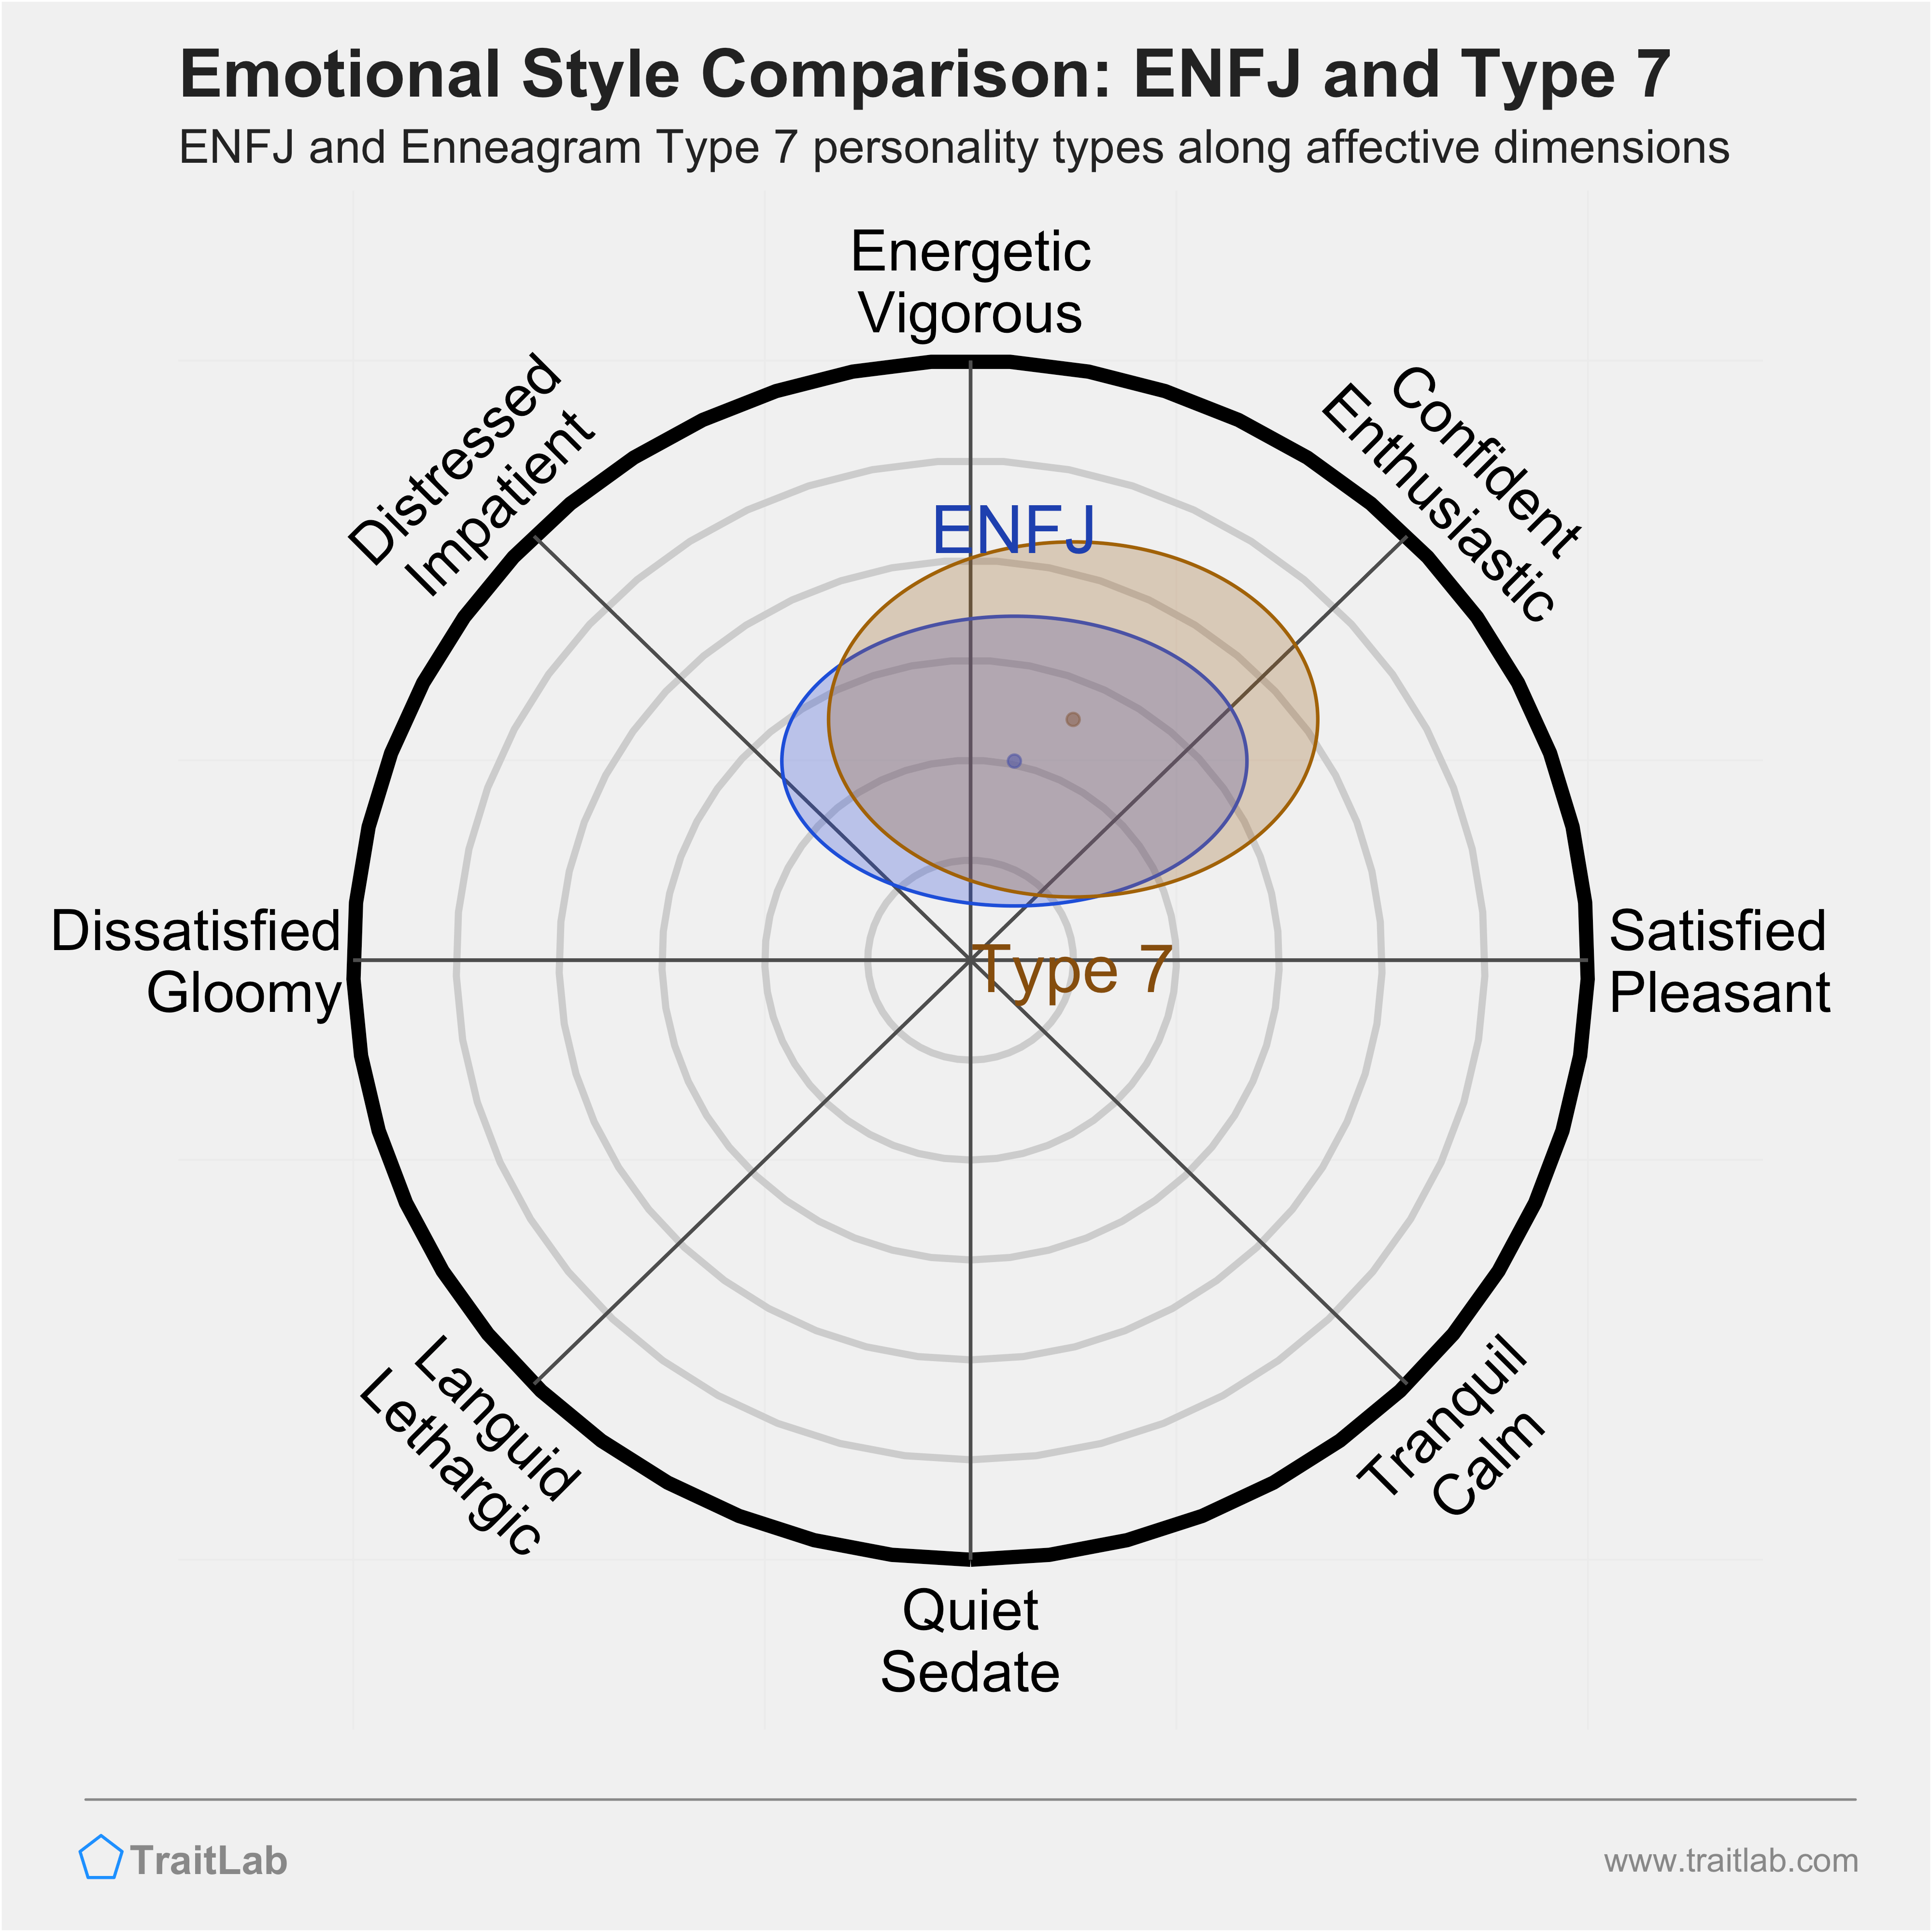 ENFJ and Type 7 comparison across emotional (affective) dimensions